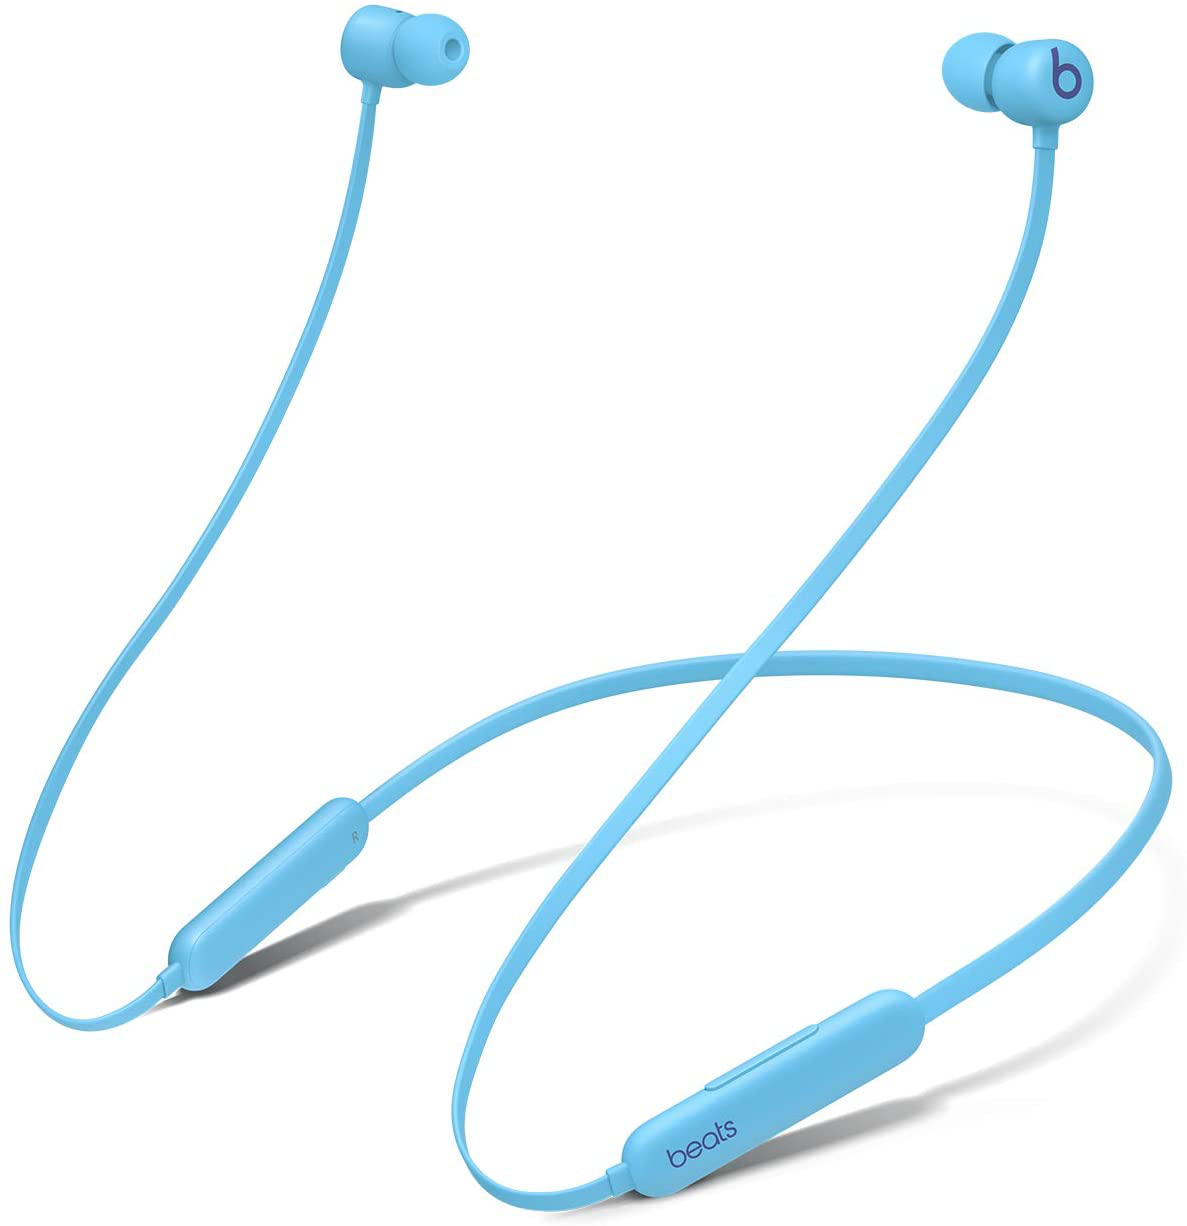 Beats Flex Wireless Earbuds – Apple W1 Headphone Chip, Magnetic Earphones, Class 1 Bluetooth, 12 Hours of Listening Time, Built-in Microphone